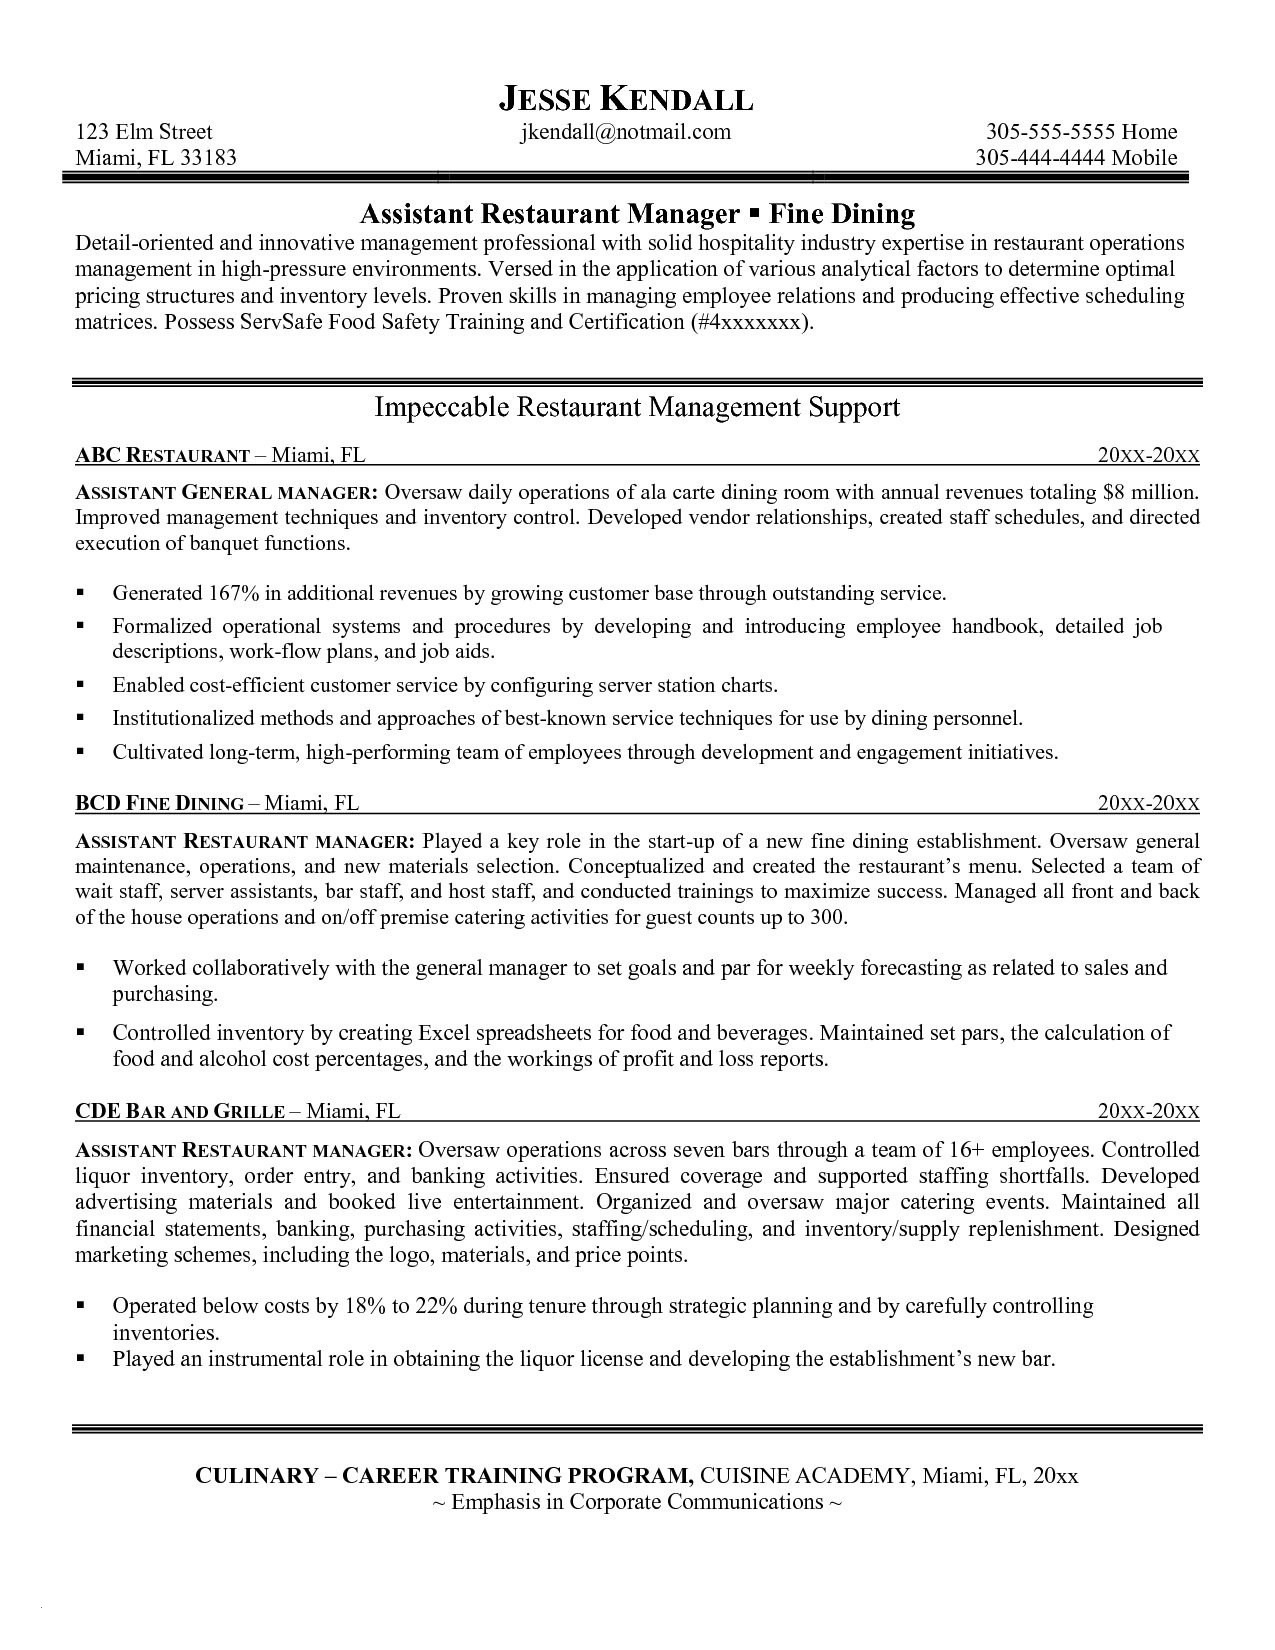 General manager resume headline June 10 Within Restaurant Manager Job Description Template Inside Restaurant Manager Job Description Template